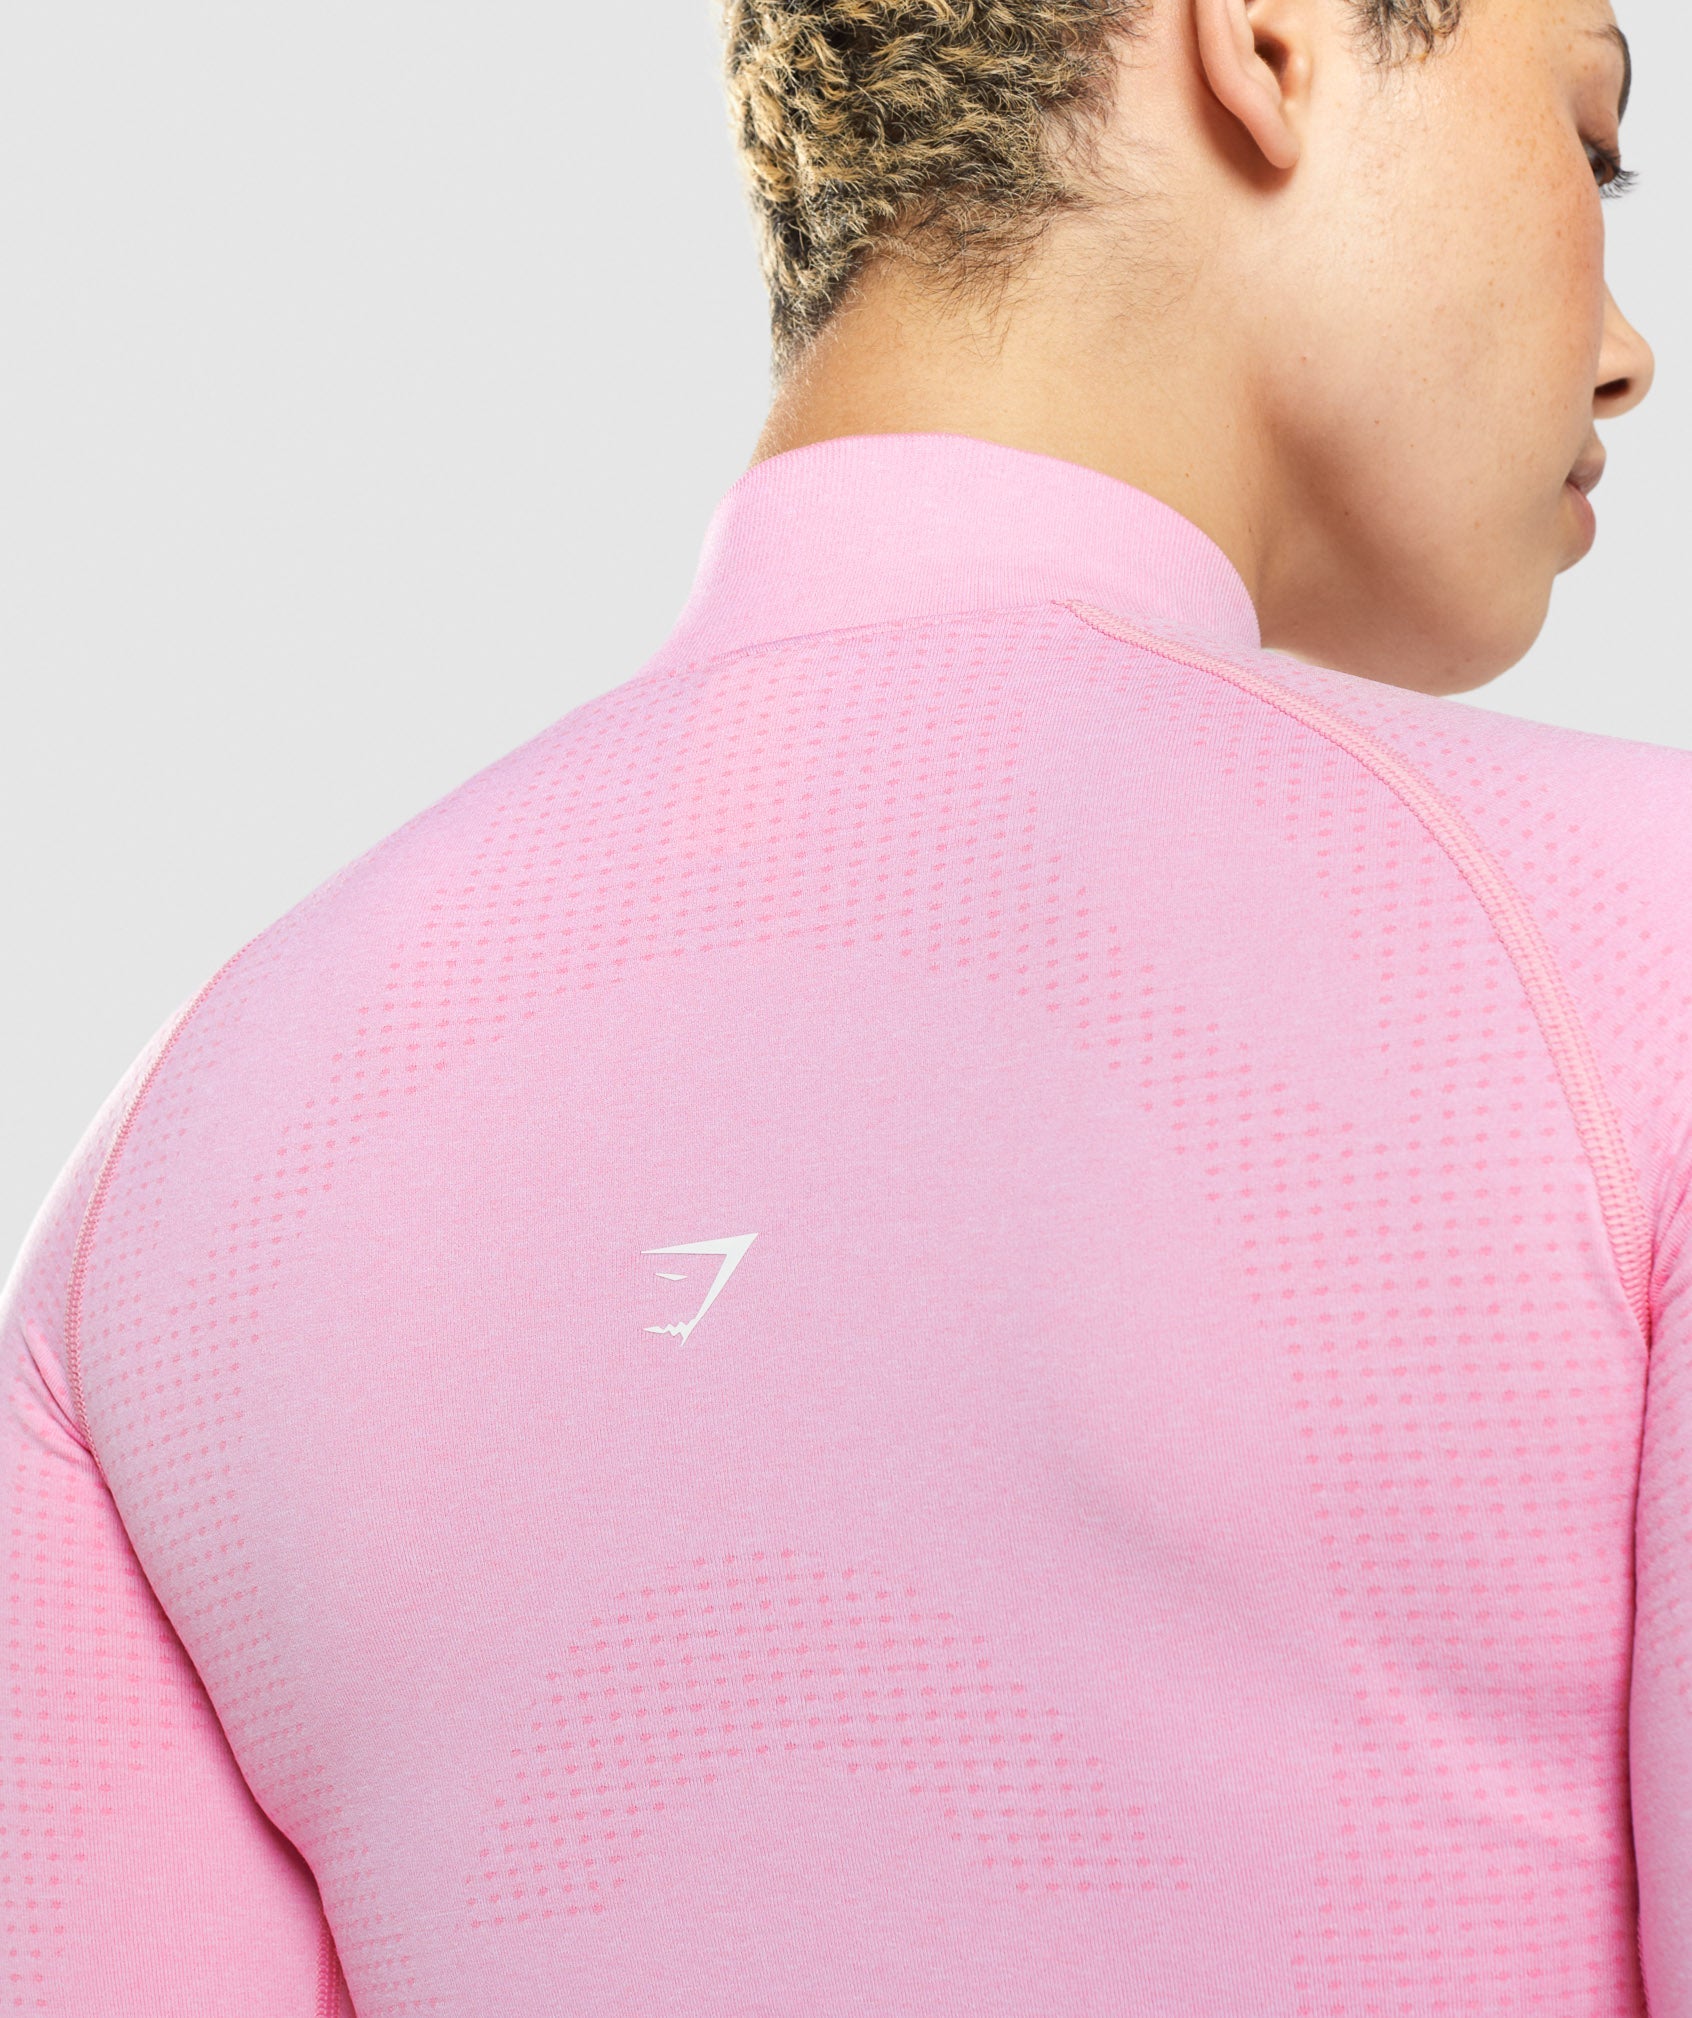 Vital Seamless 2.0 1/2 Zip Pullover in Sorbet Pink Marl - view 5